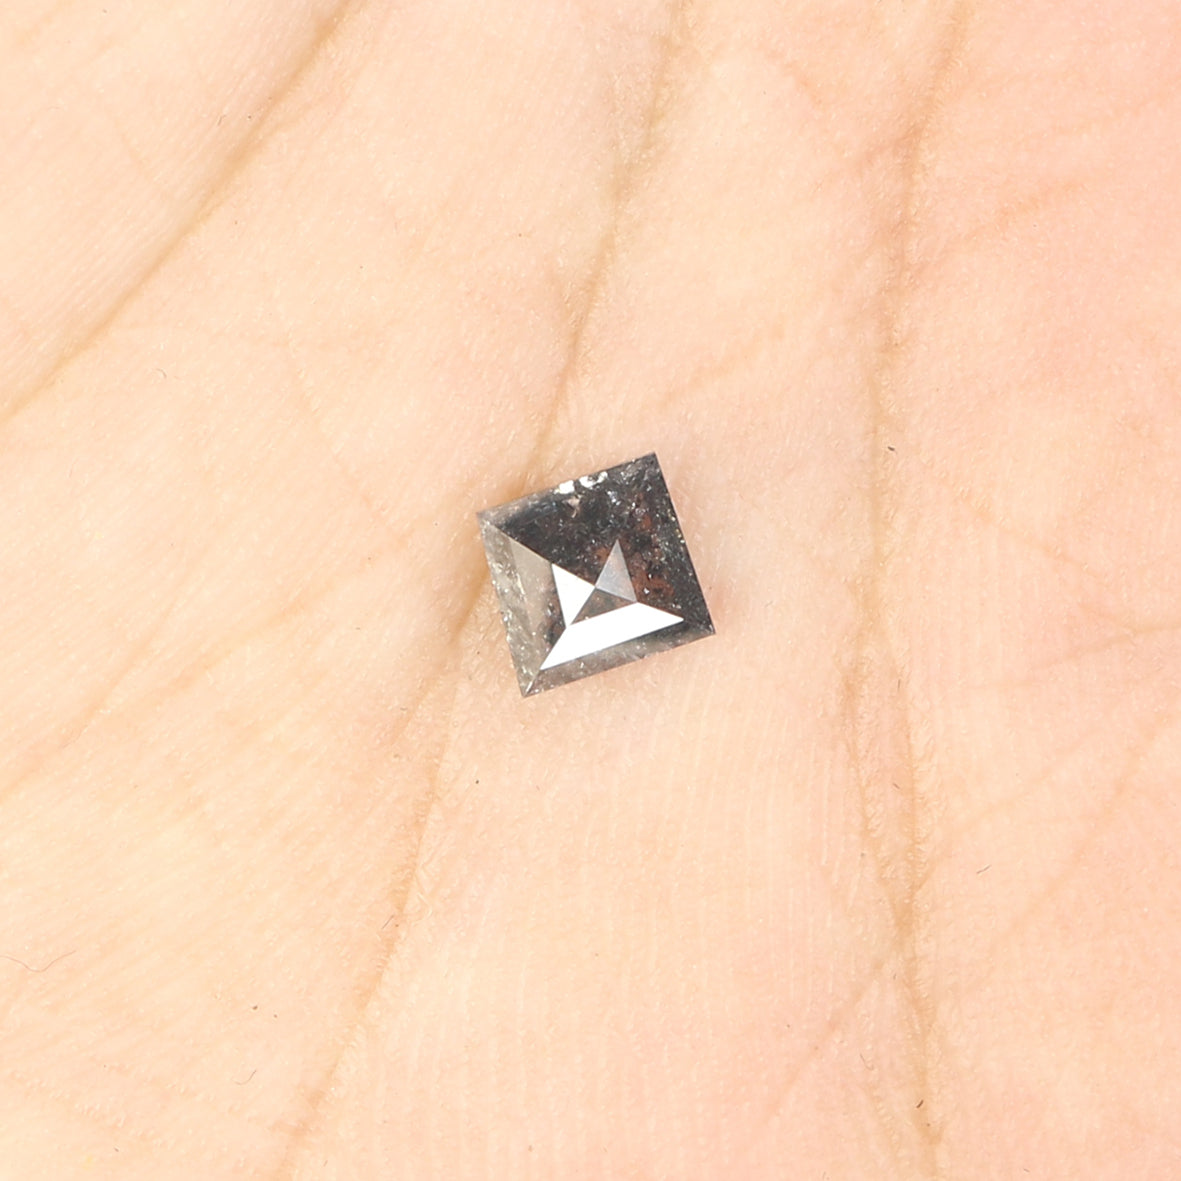 0.60 CT Natural Loose Kite Shape Diamond Salt And Pepper Kite Shape Diamond 6.80 MM Natural Black Grey Color Kite Rose Cut Diamond QL159